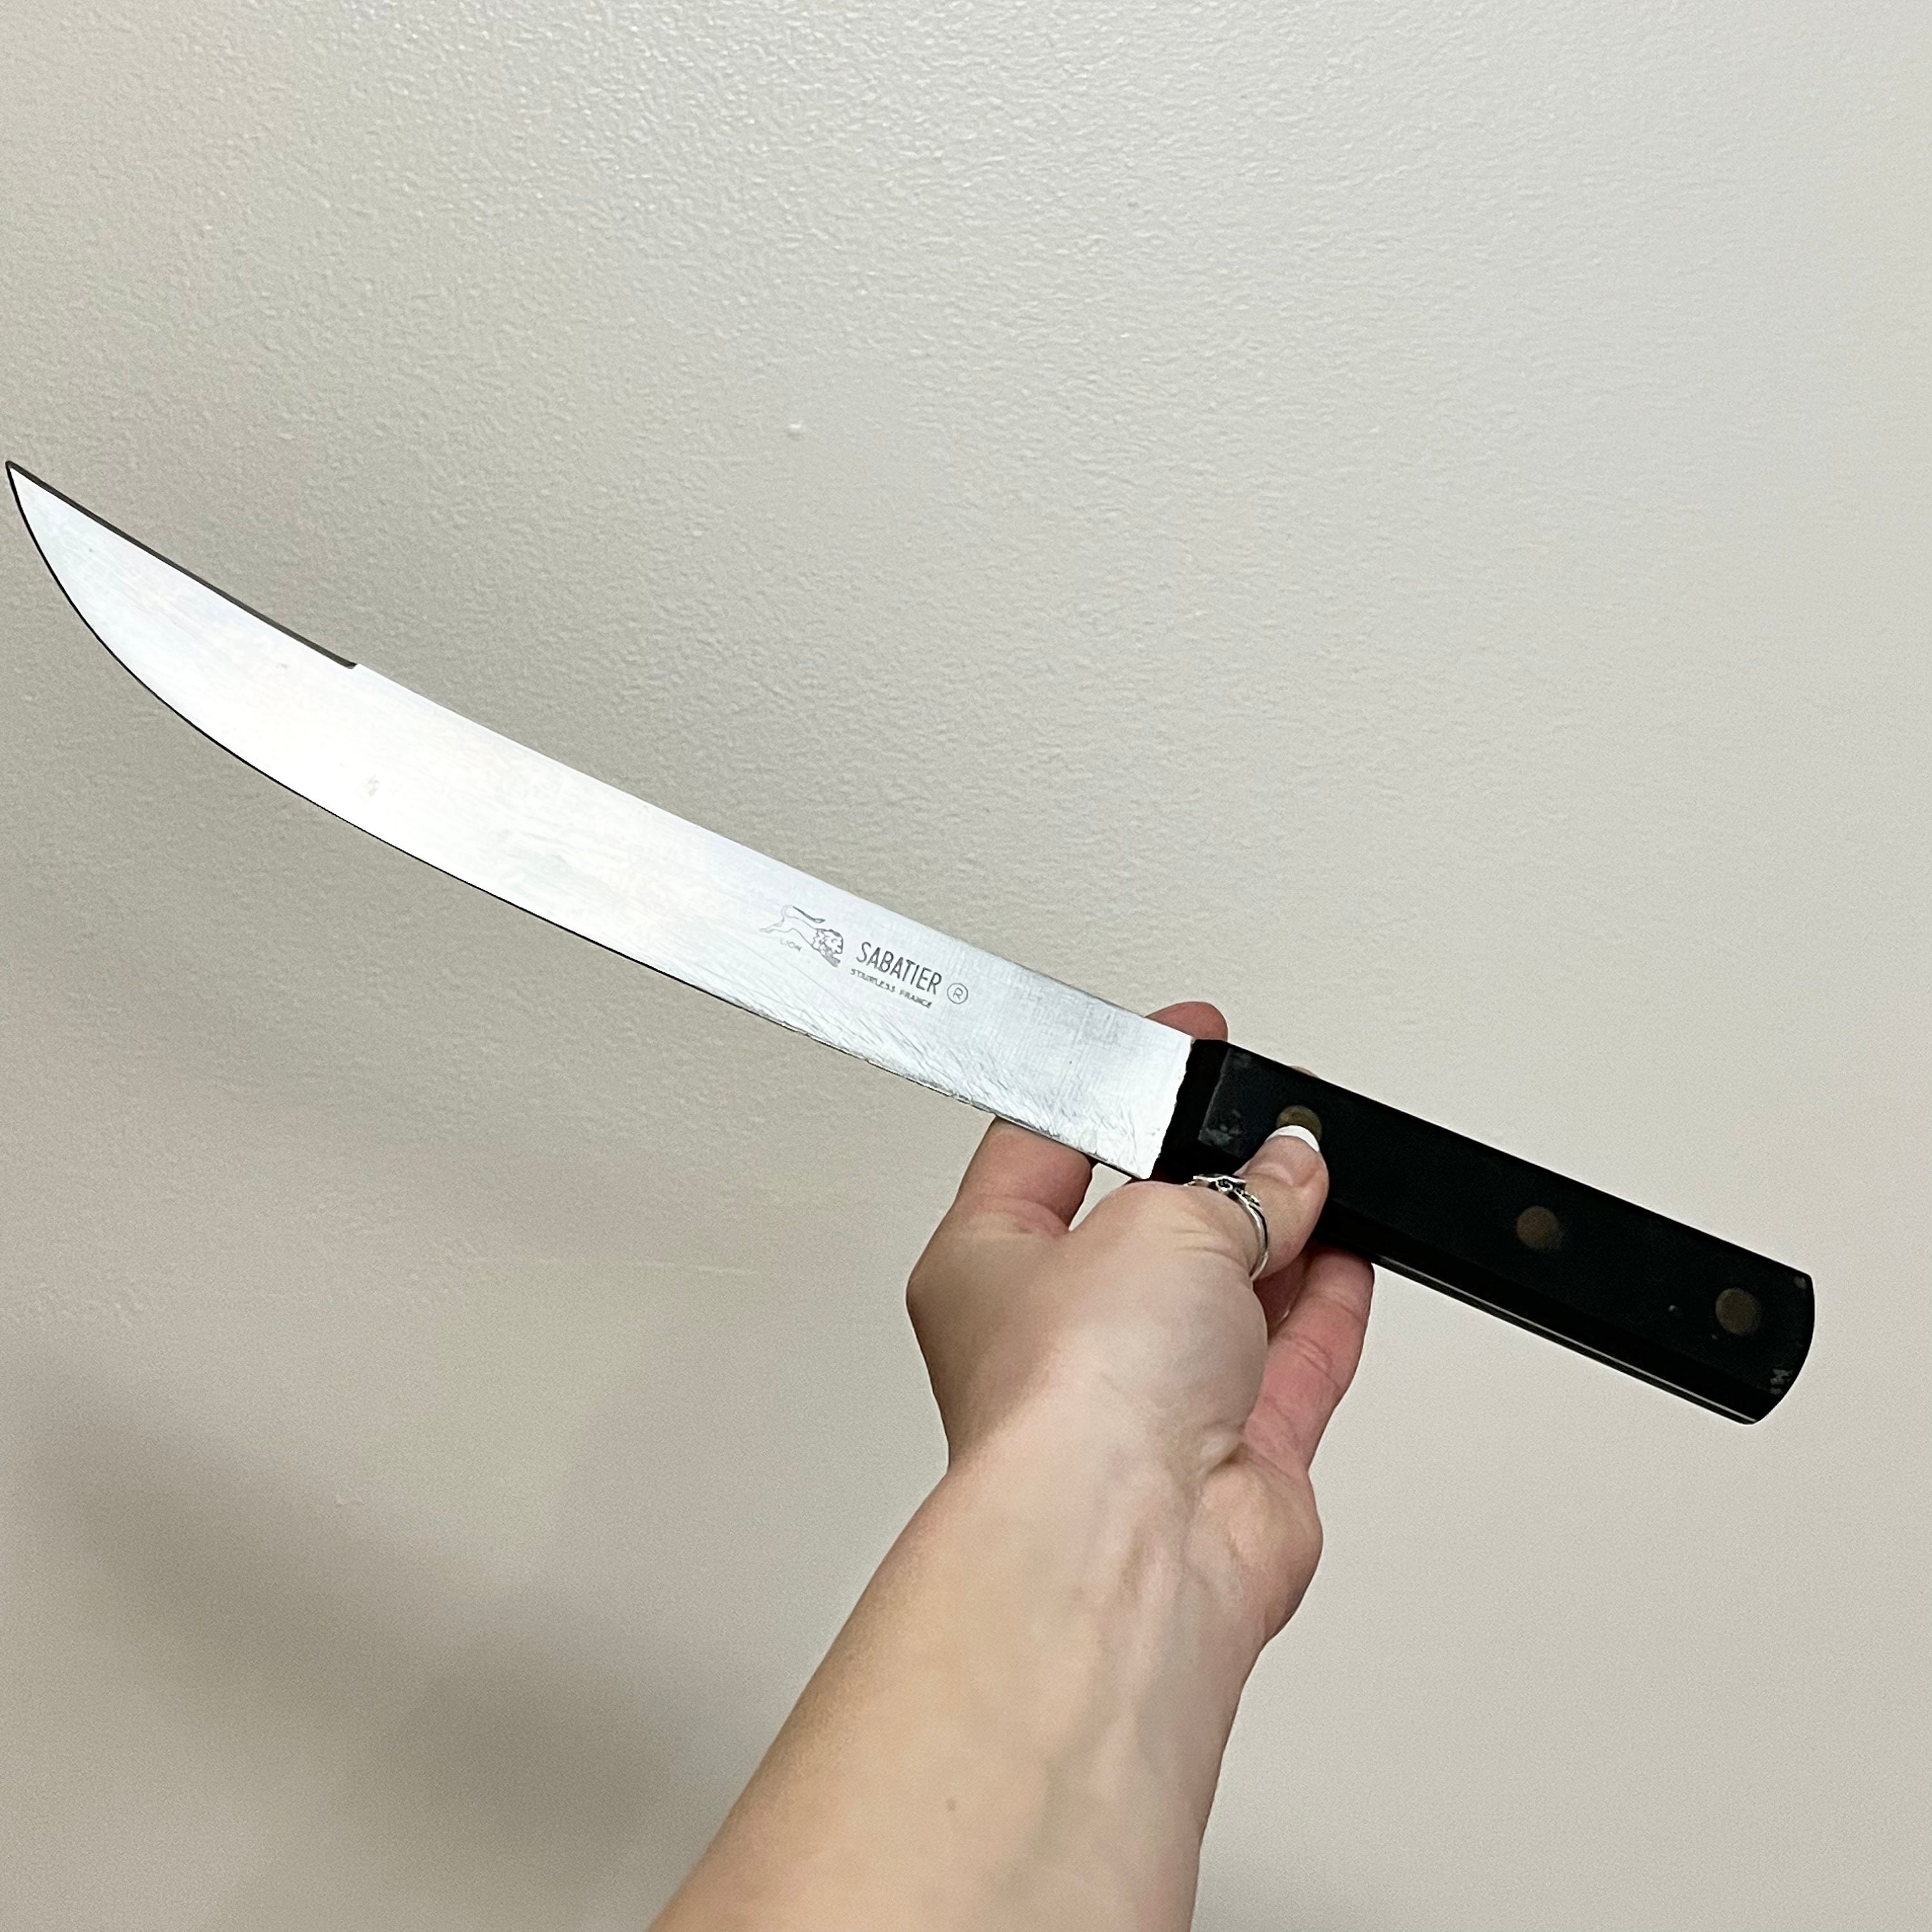 SABATIER 7 1/2 Chef's Knife - Stainless Steel - SHARP !